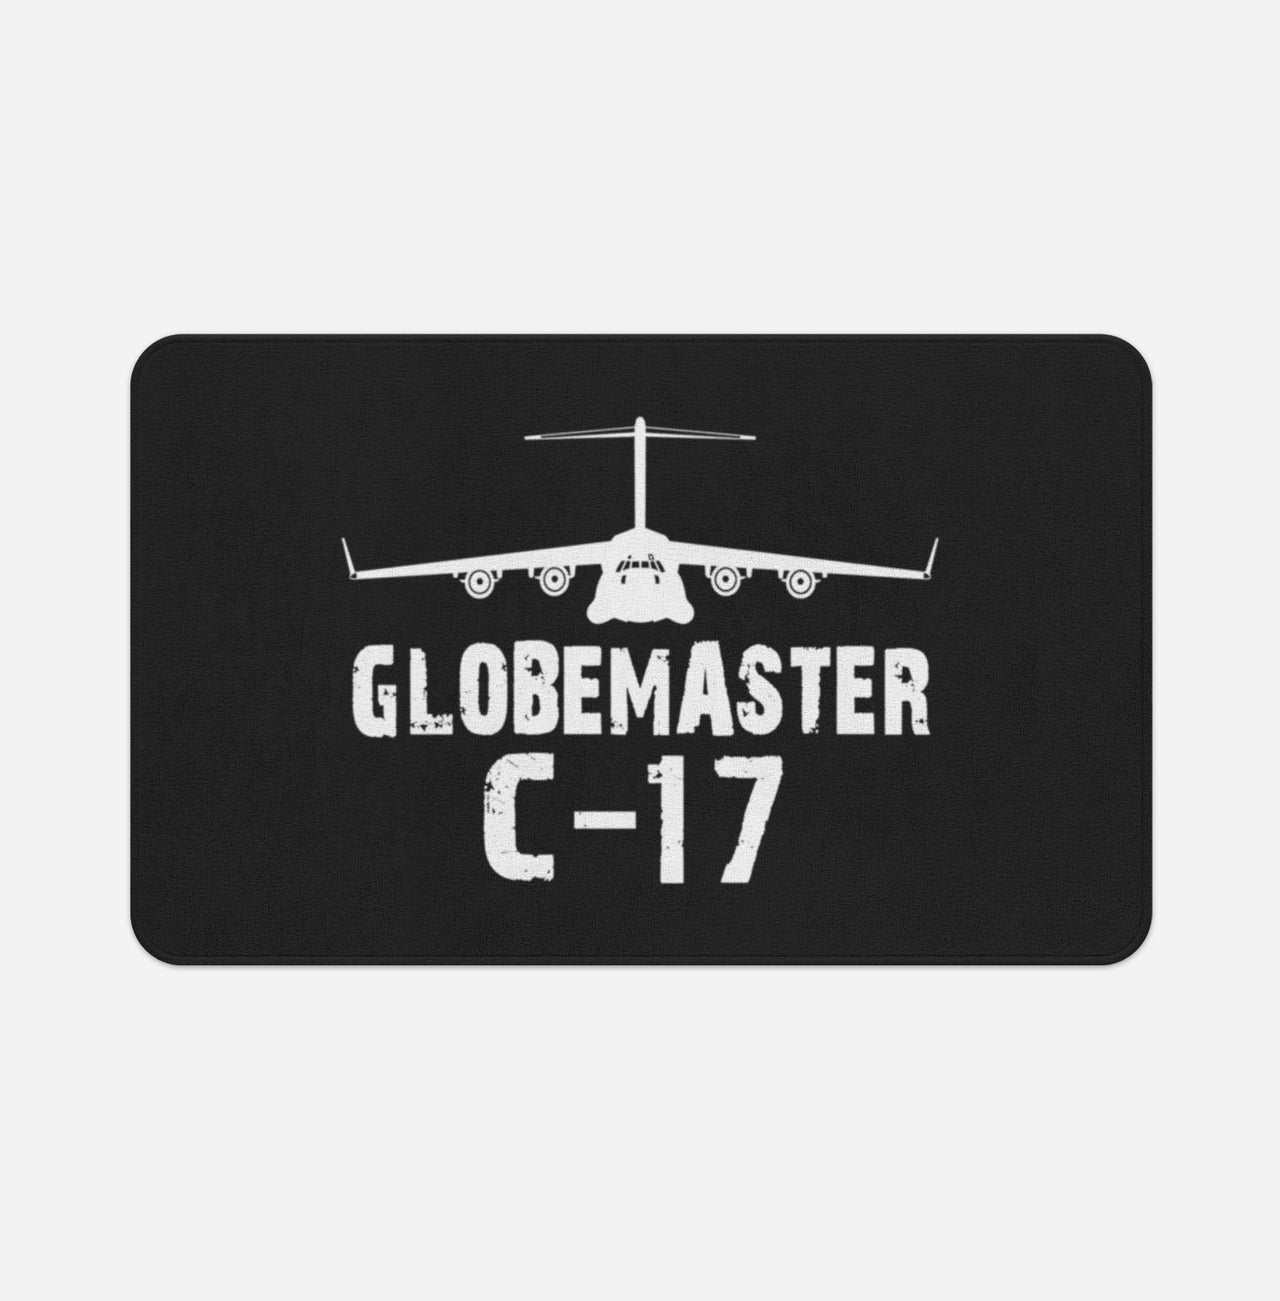 GlobeMaster C-17 & Plane Designed Bath Mats